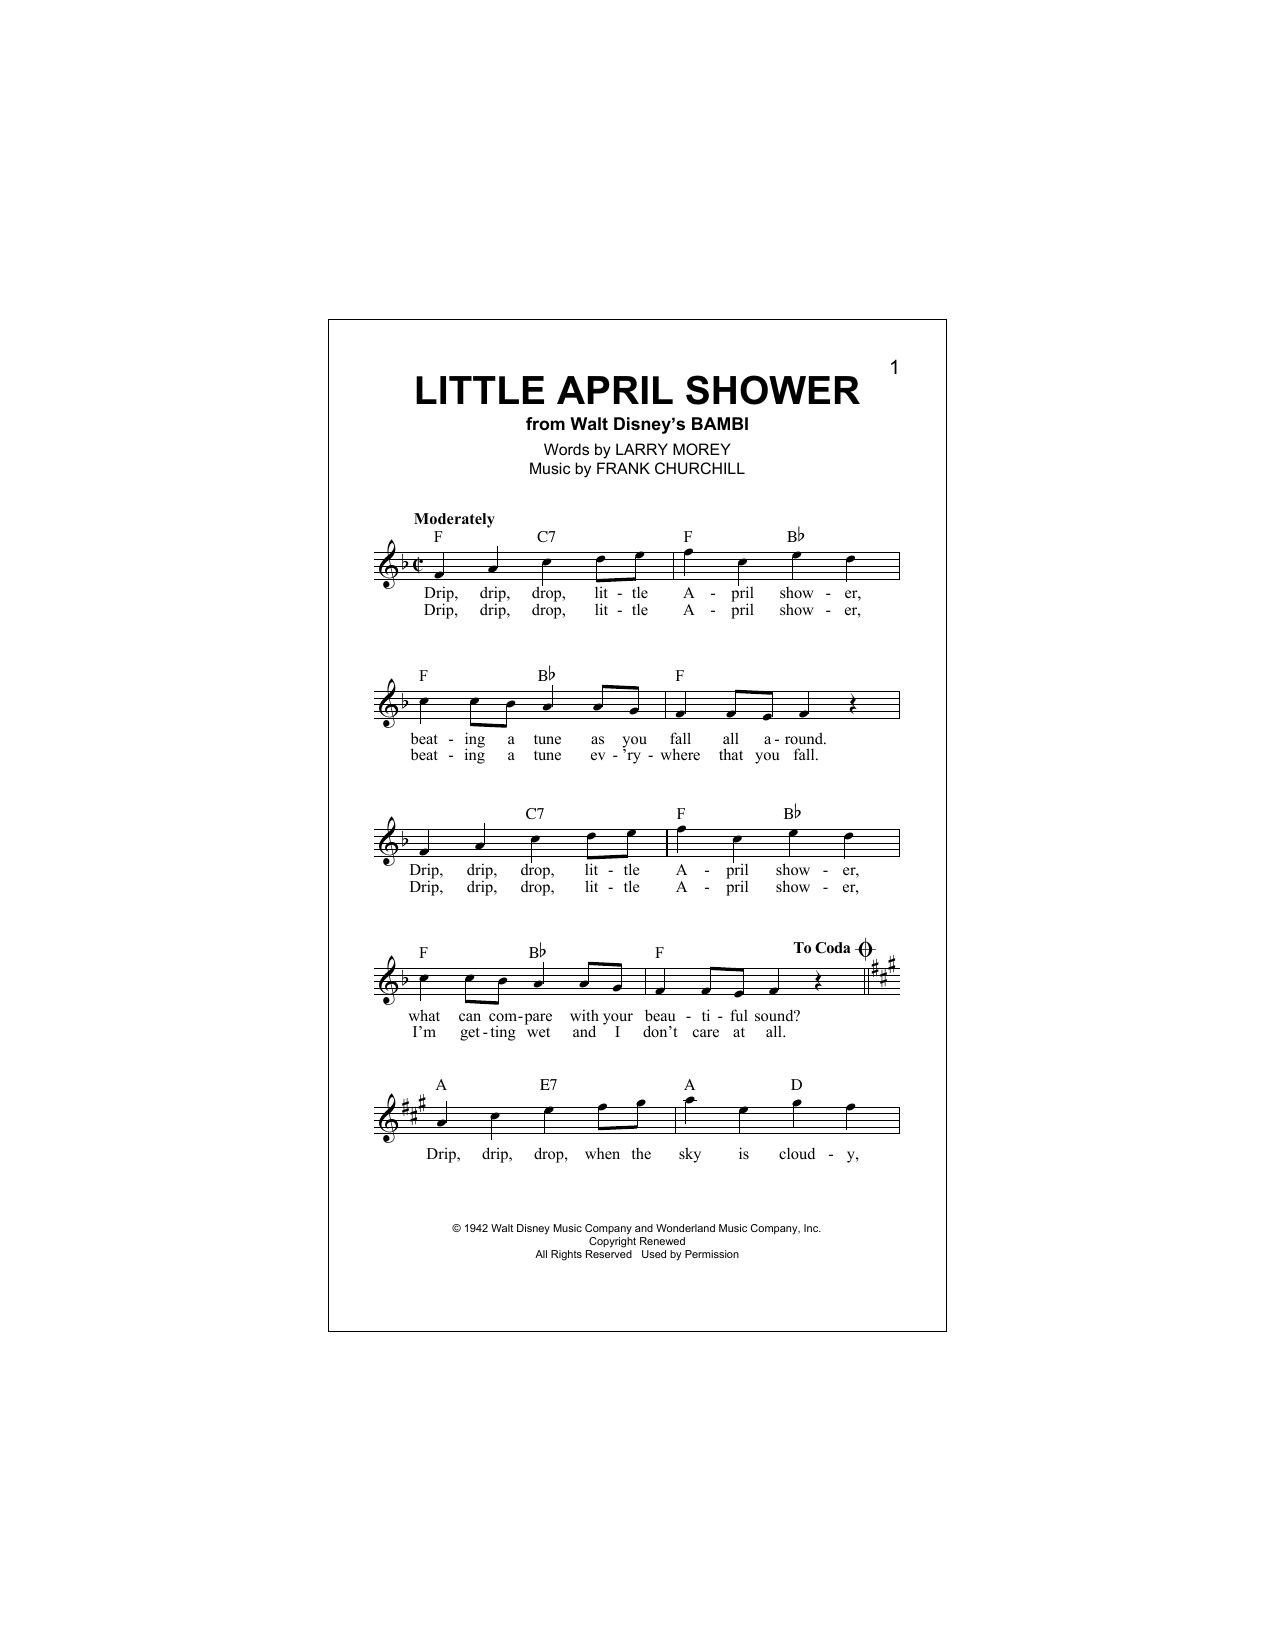 Larry Morey Little April Shower Sheet Music Notes & Chords for Lead Sheet / Fake Book - Download or Print PDF